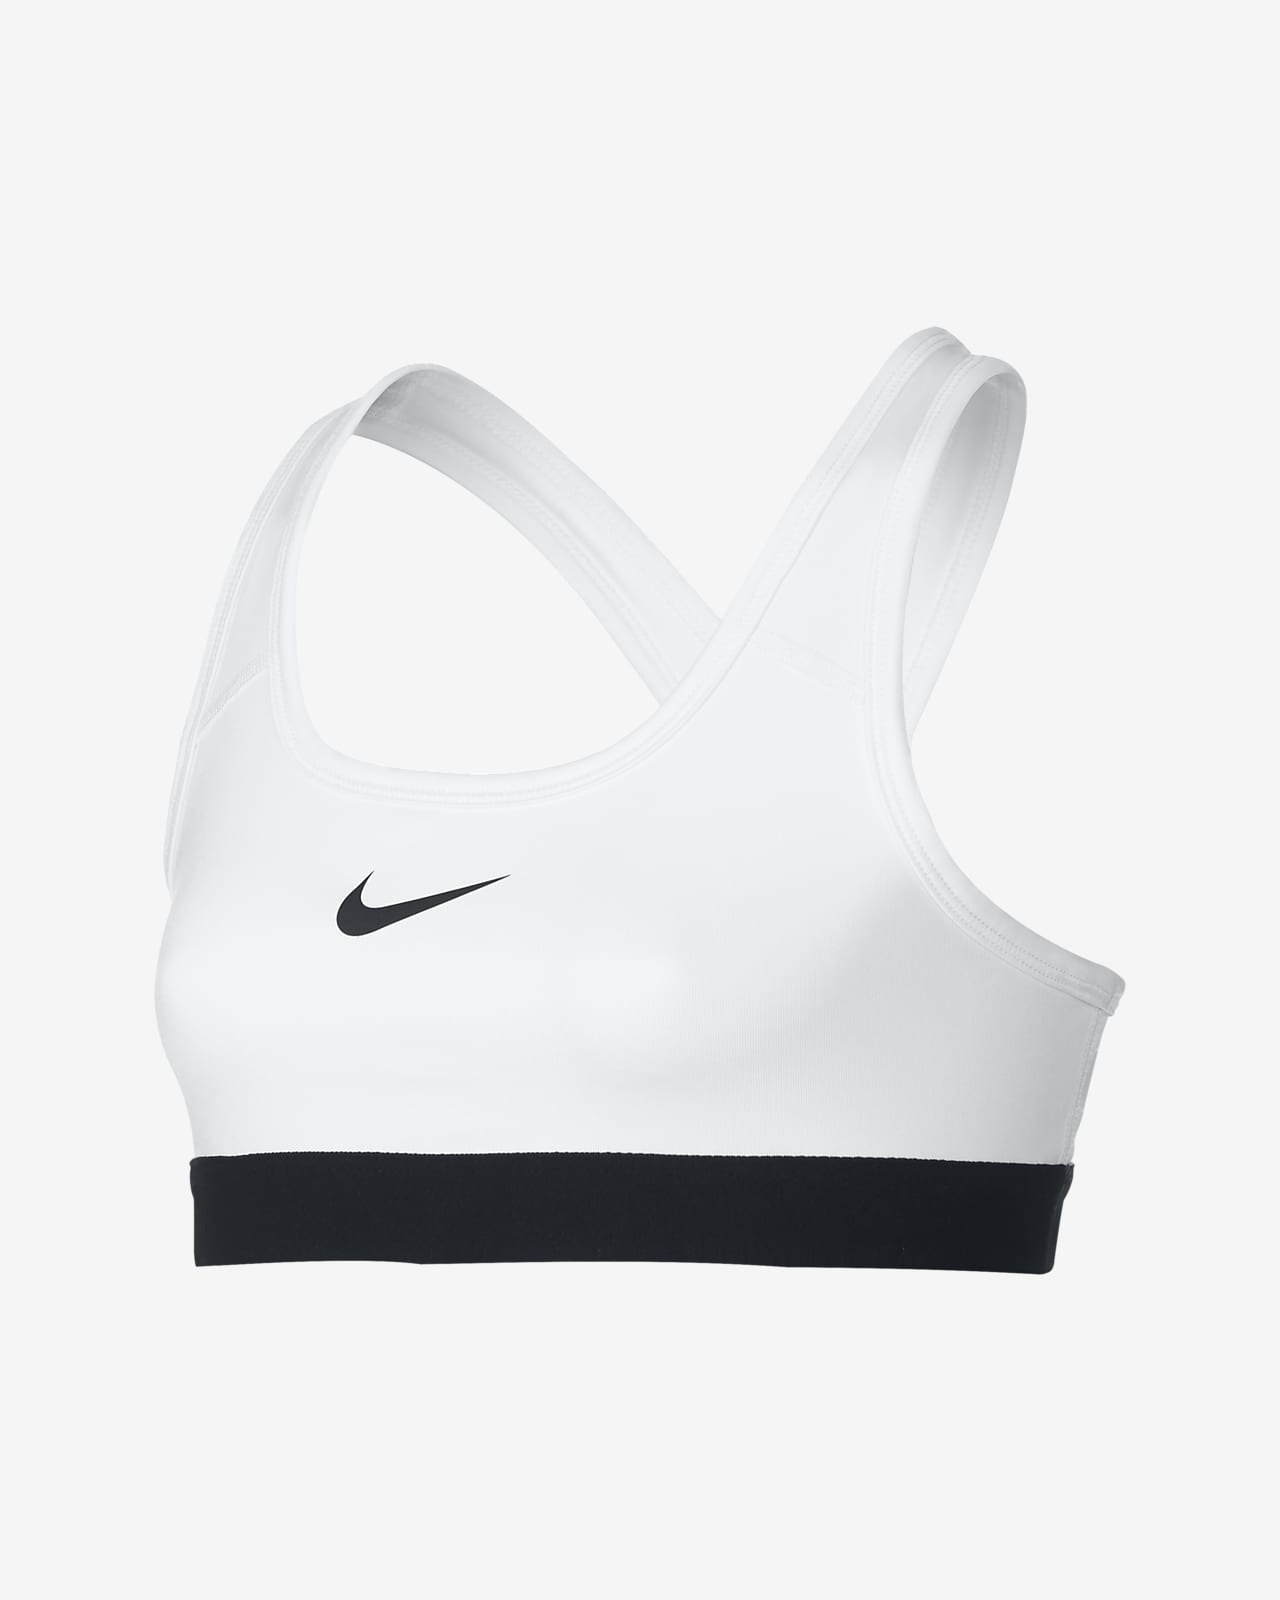 Nike Pro Sports Bra Nike Like the plain white tee or little black dress,  the Nike Pro Women's Sports Bra is minimalist …